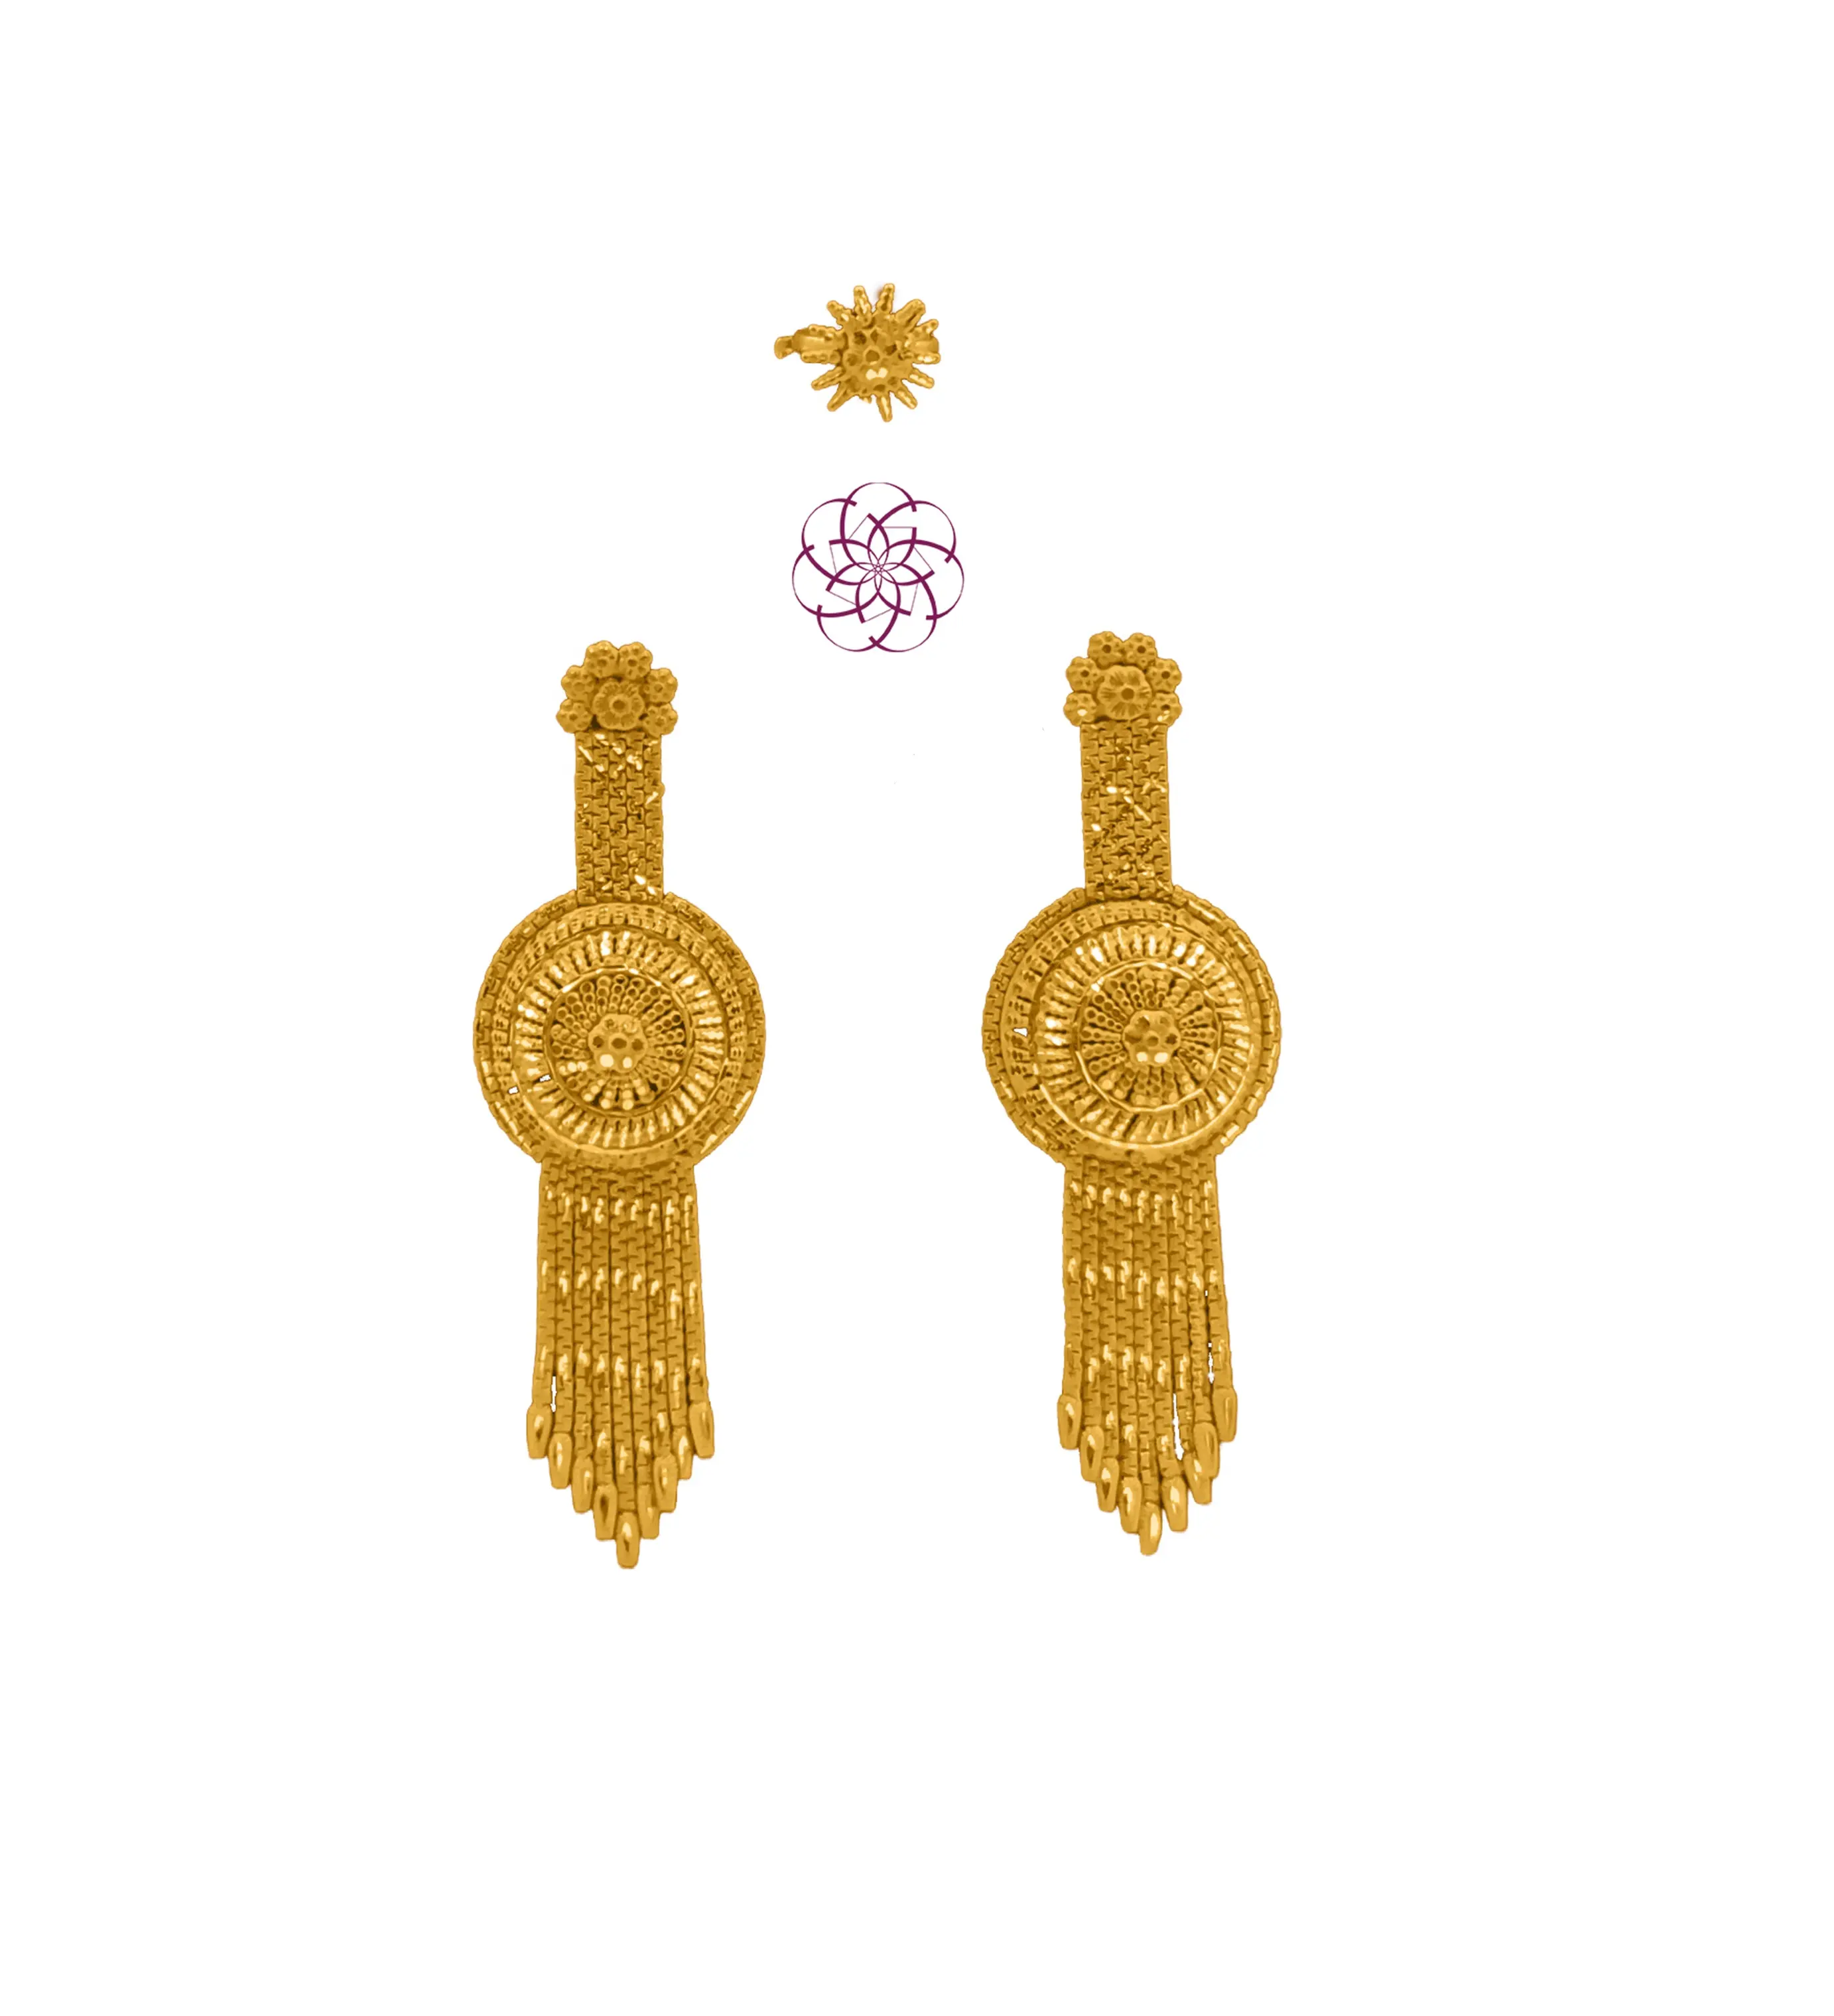 5 gramme 24K Gold Plated Earring Set Boucles D'oreilles Bague De Luxe Bijoux Plaque Or Africaine Ensemble Femme African Jewelry